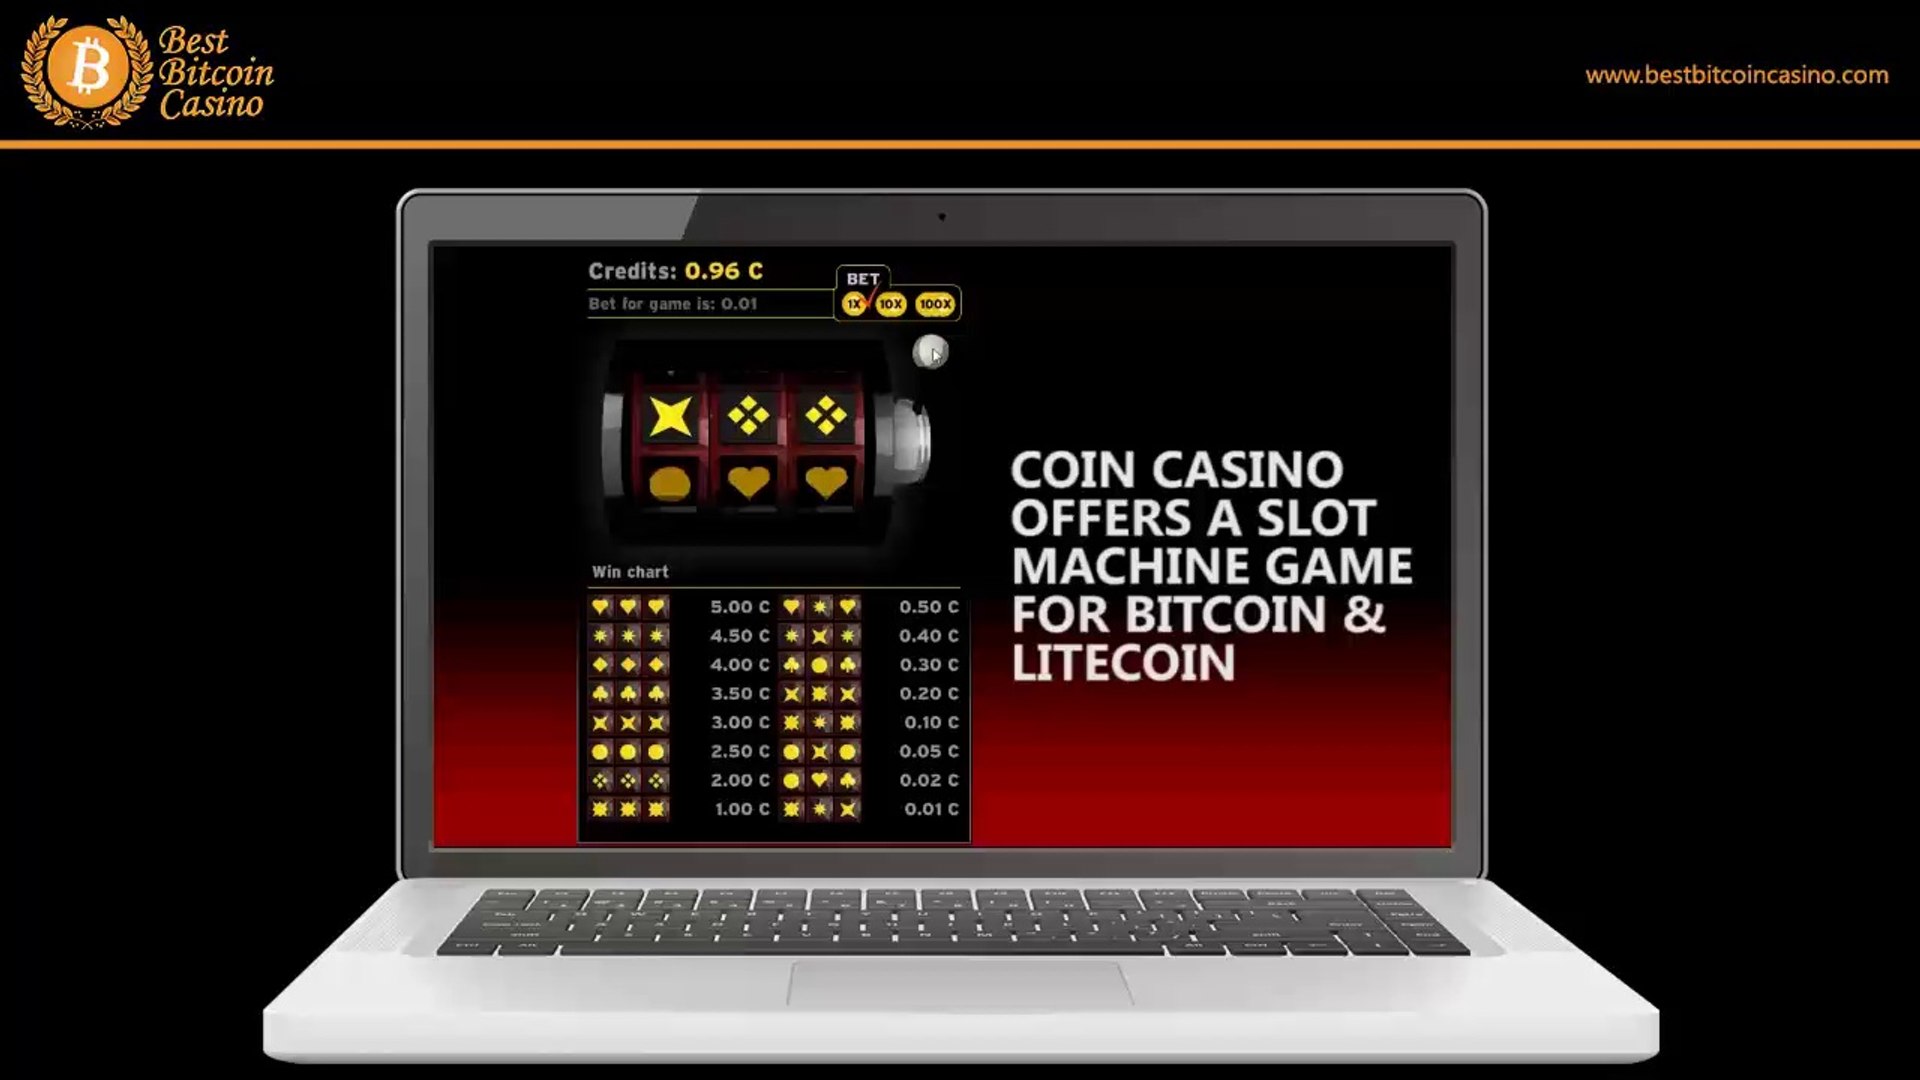 â�£Explore Bitcoin Casino Games with Coin Casino